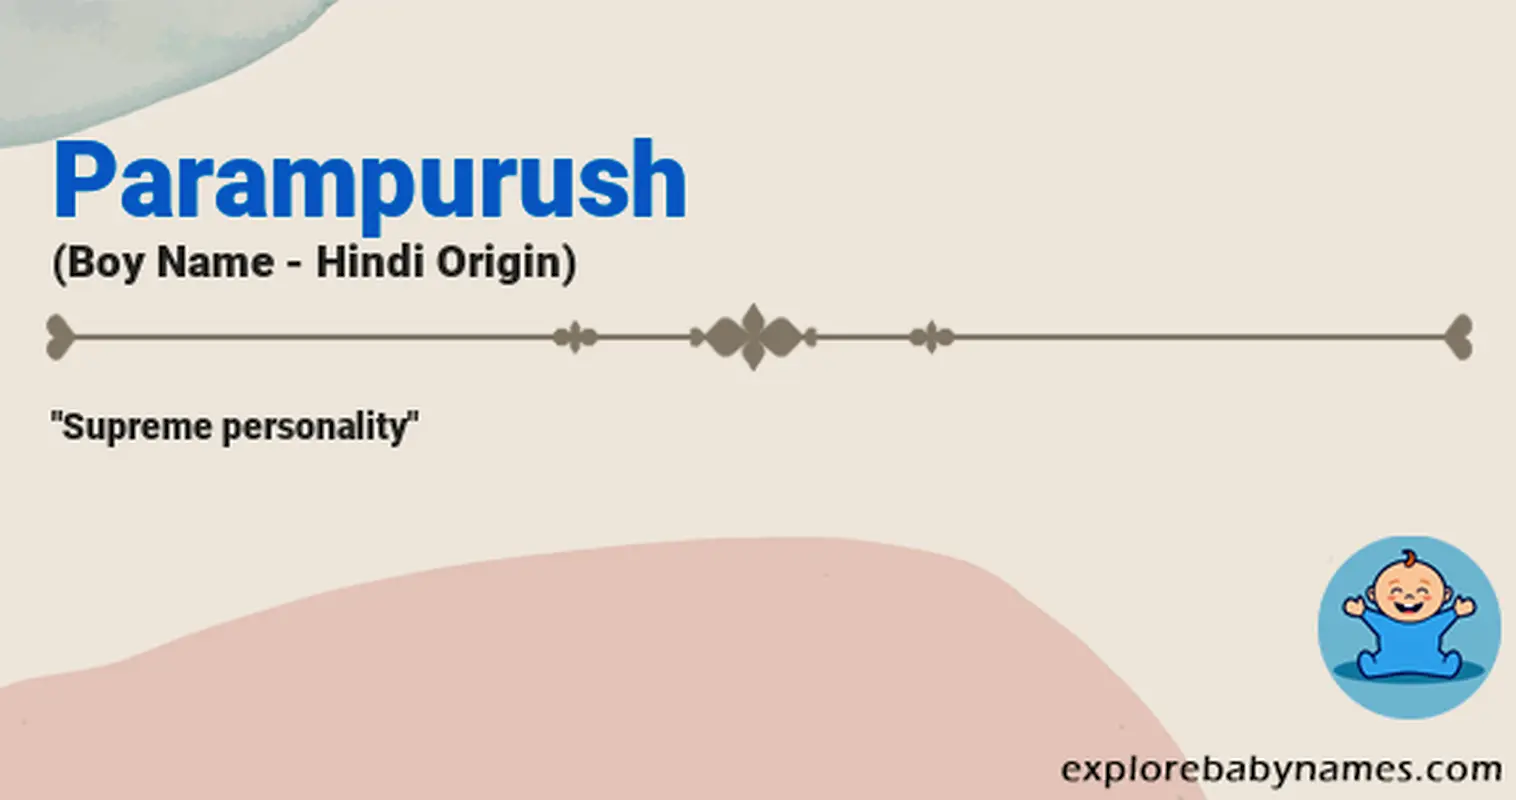 Meaning of Parampurush